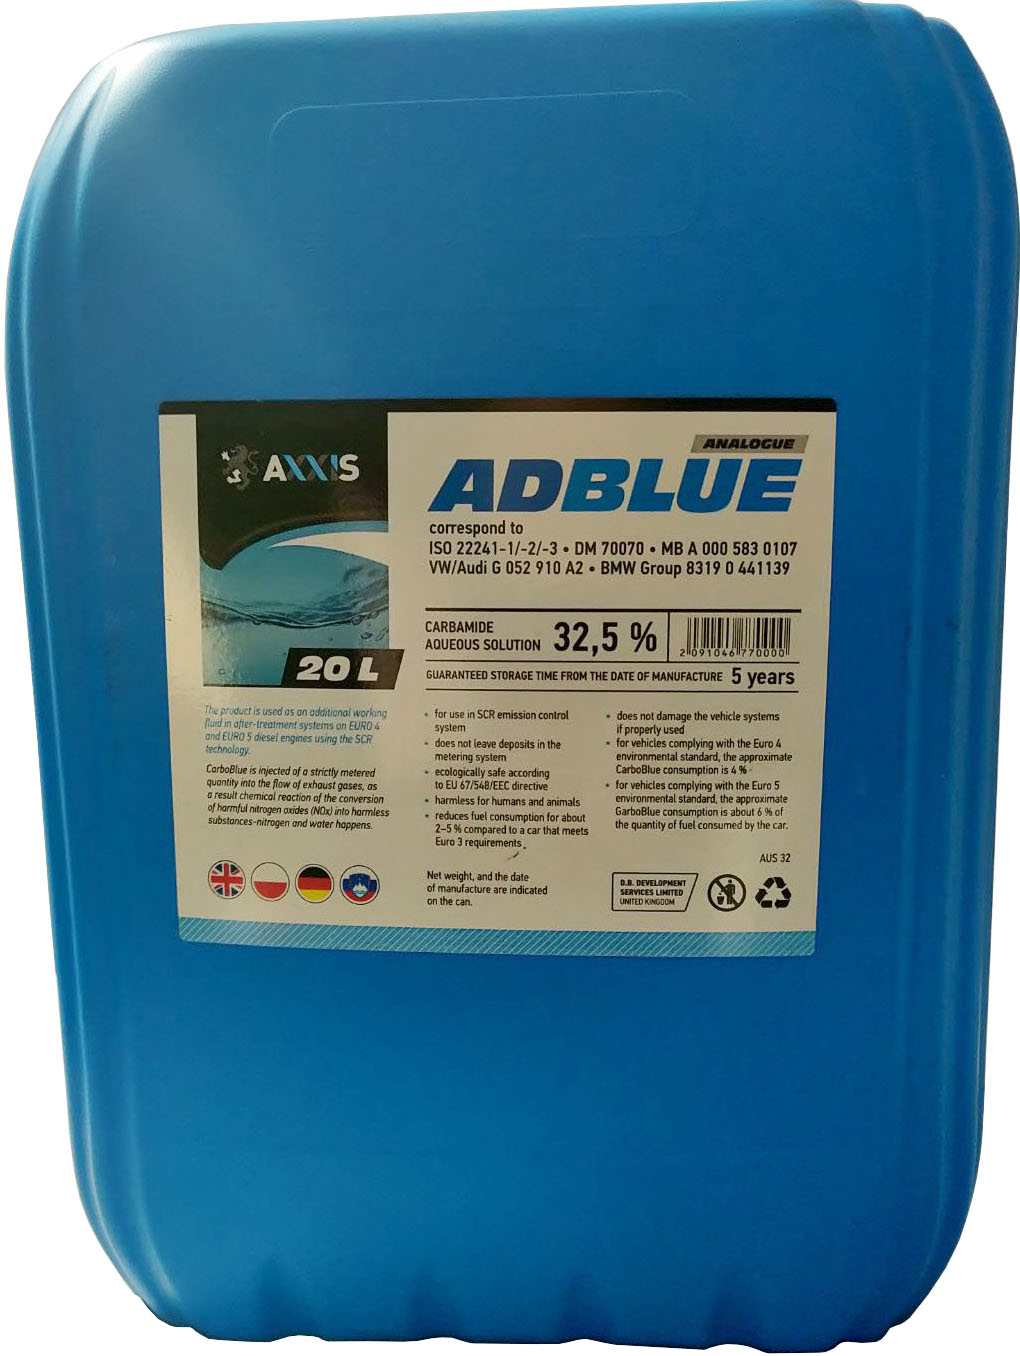 

AdBlue Axxis 501579AUS32